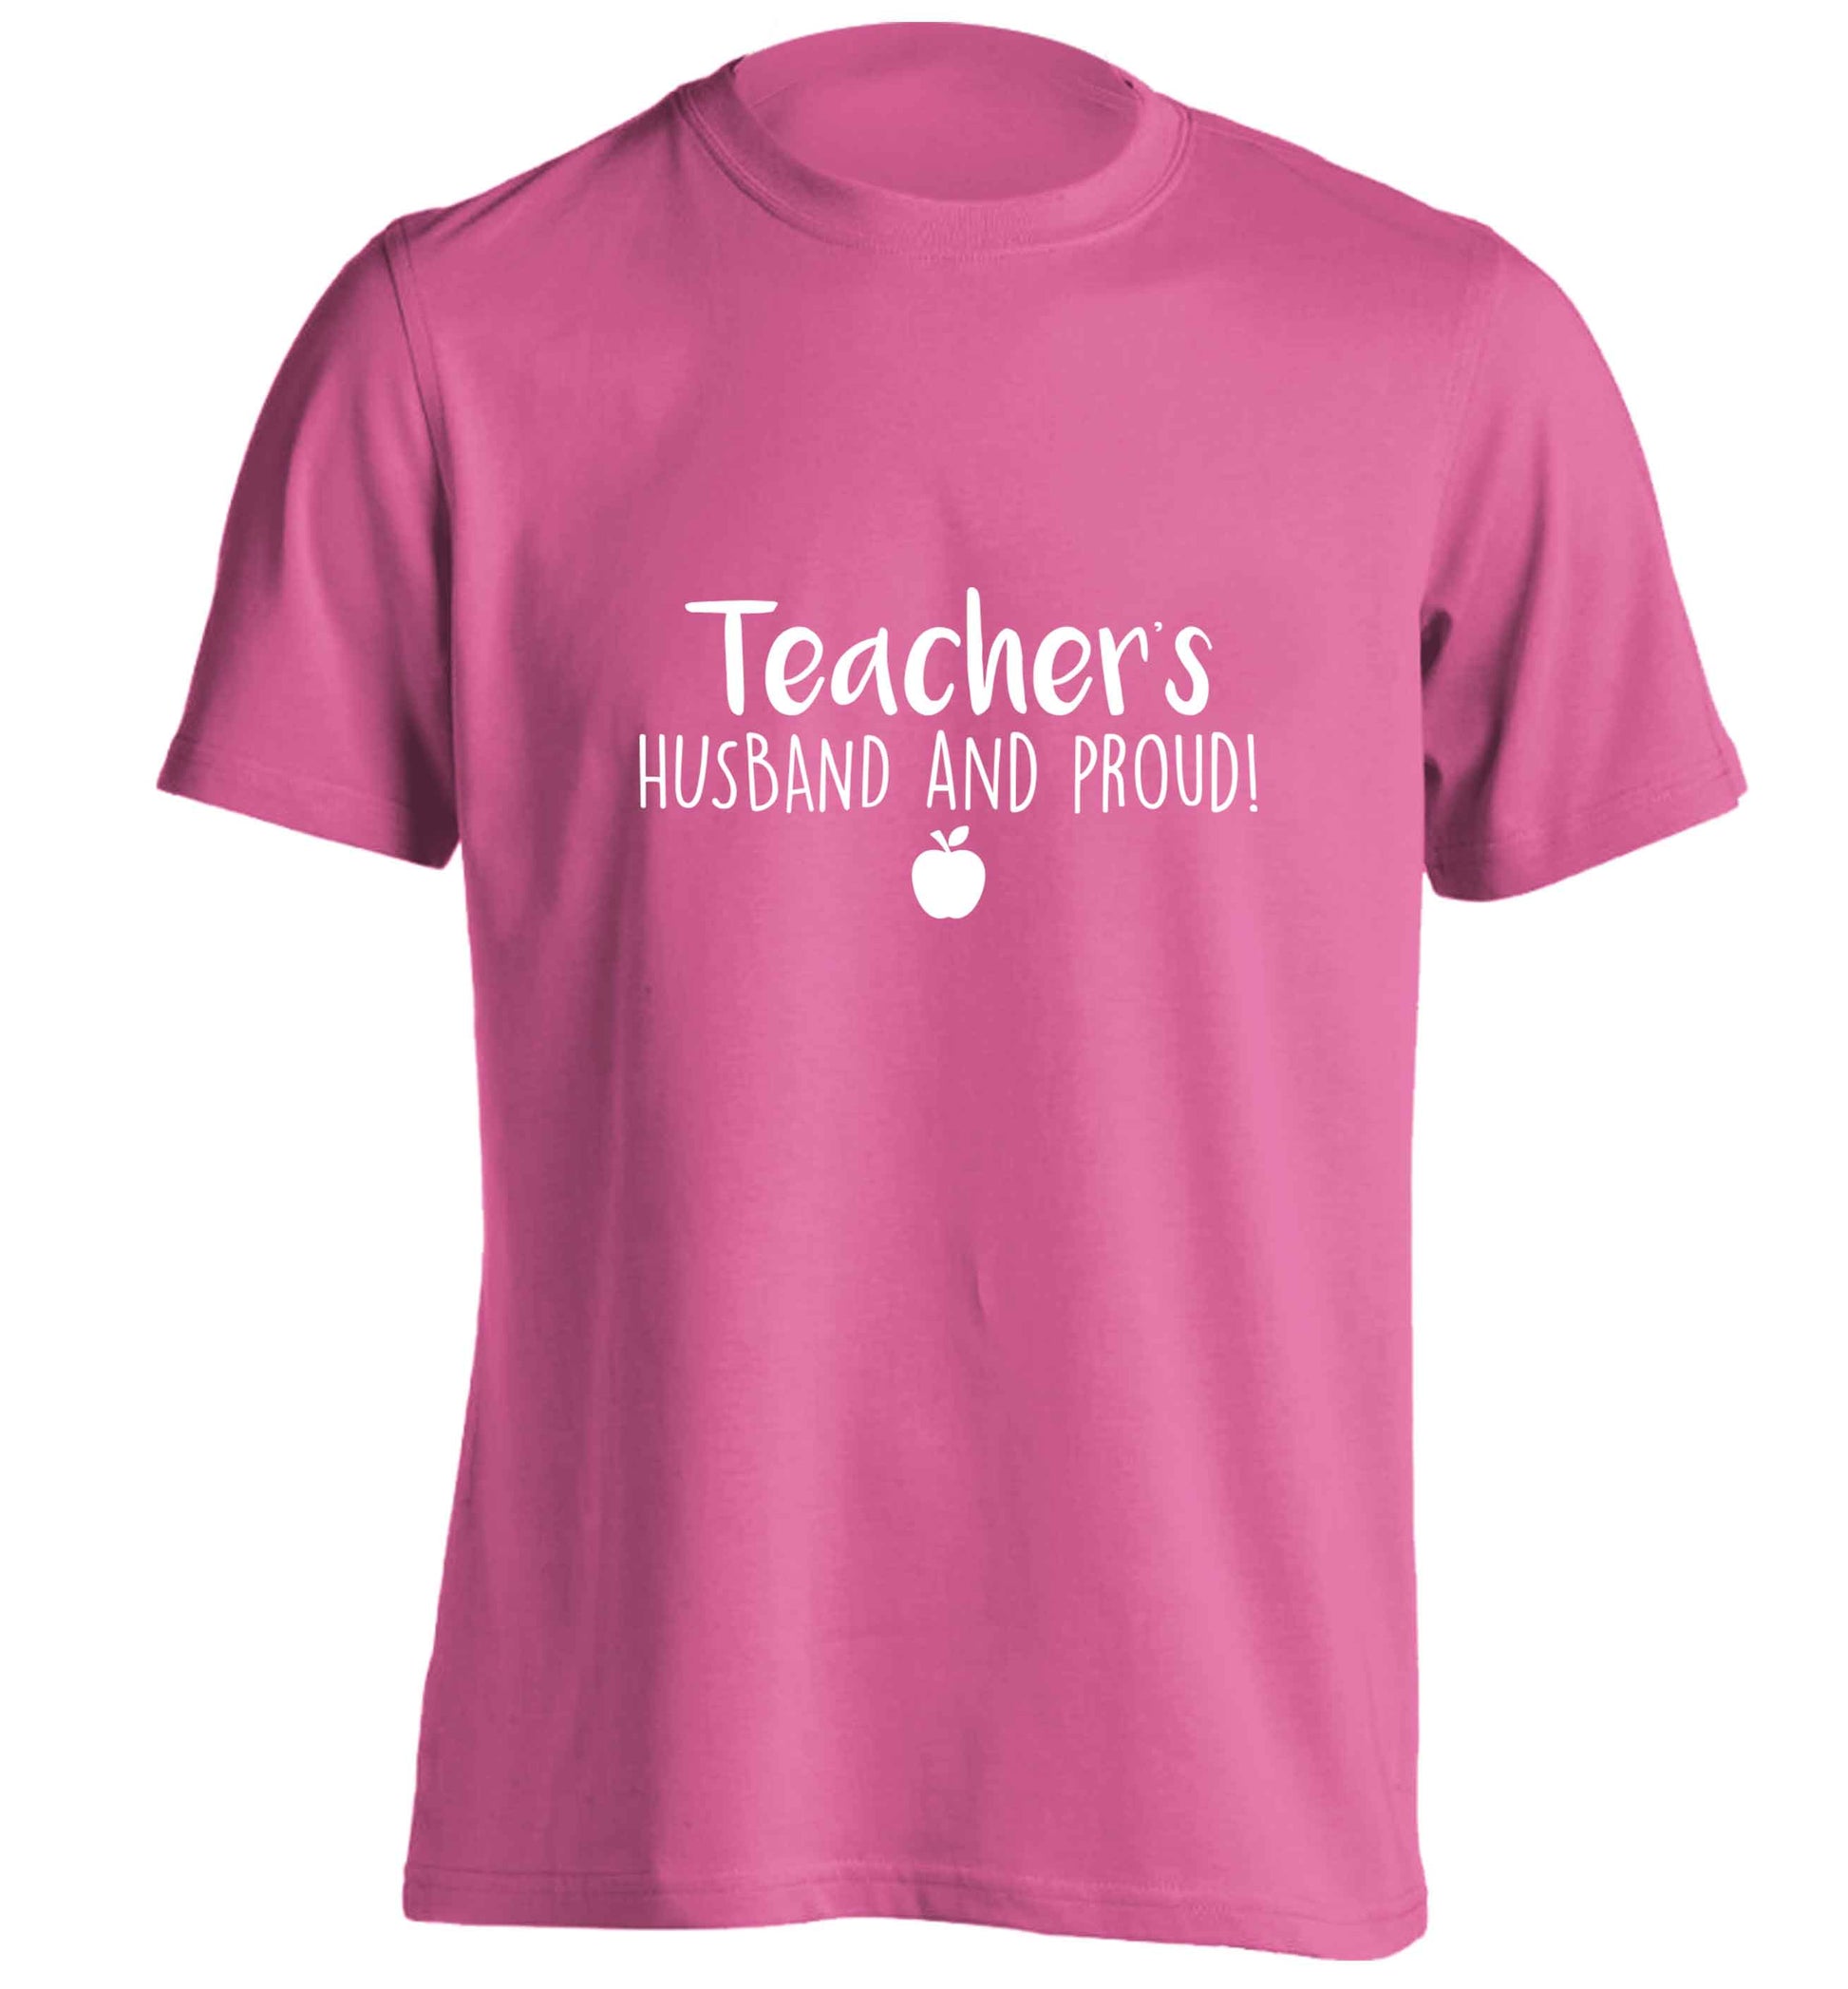 Teachers husband and proud adults unisex pink Tshirt 2XL